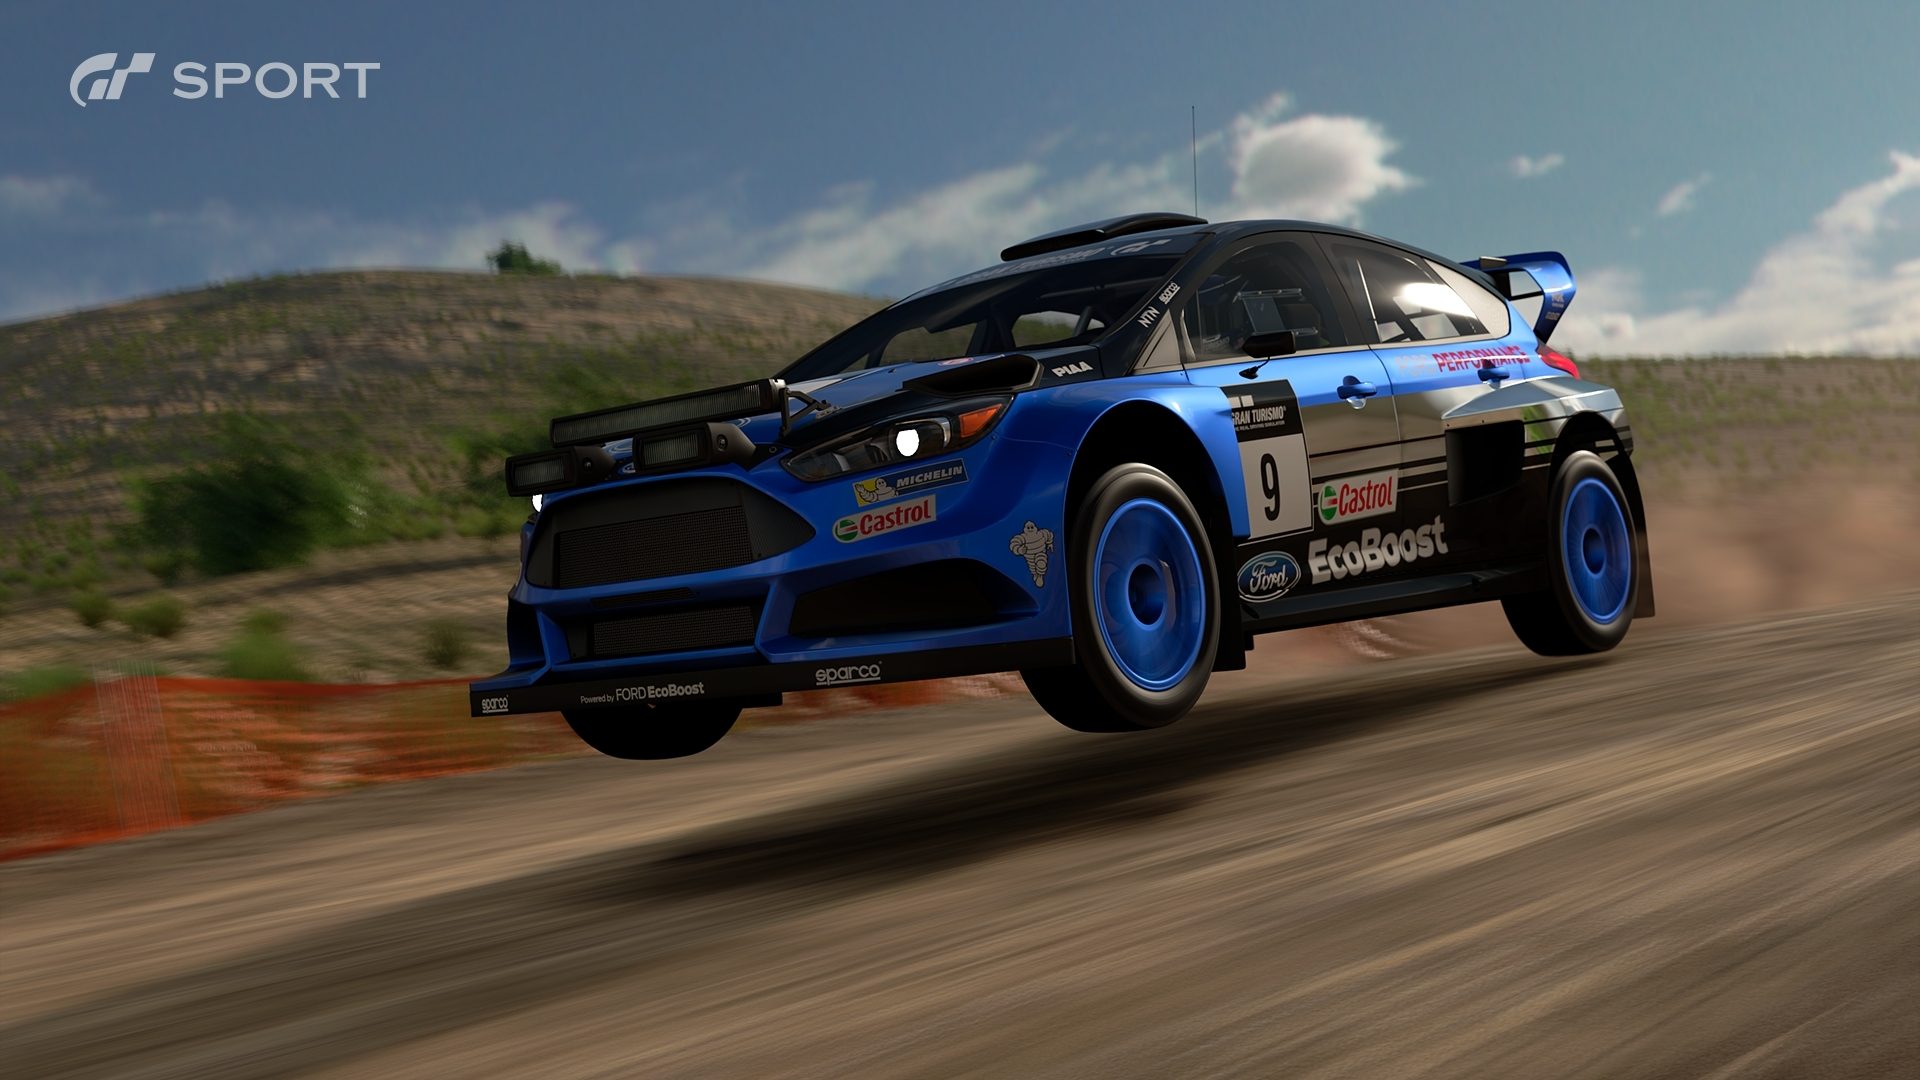 PLAYSTATION 1 - Gran Turismo 2: Ford Ka Rally 